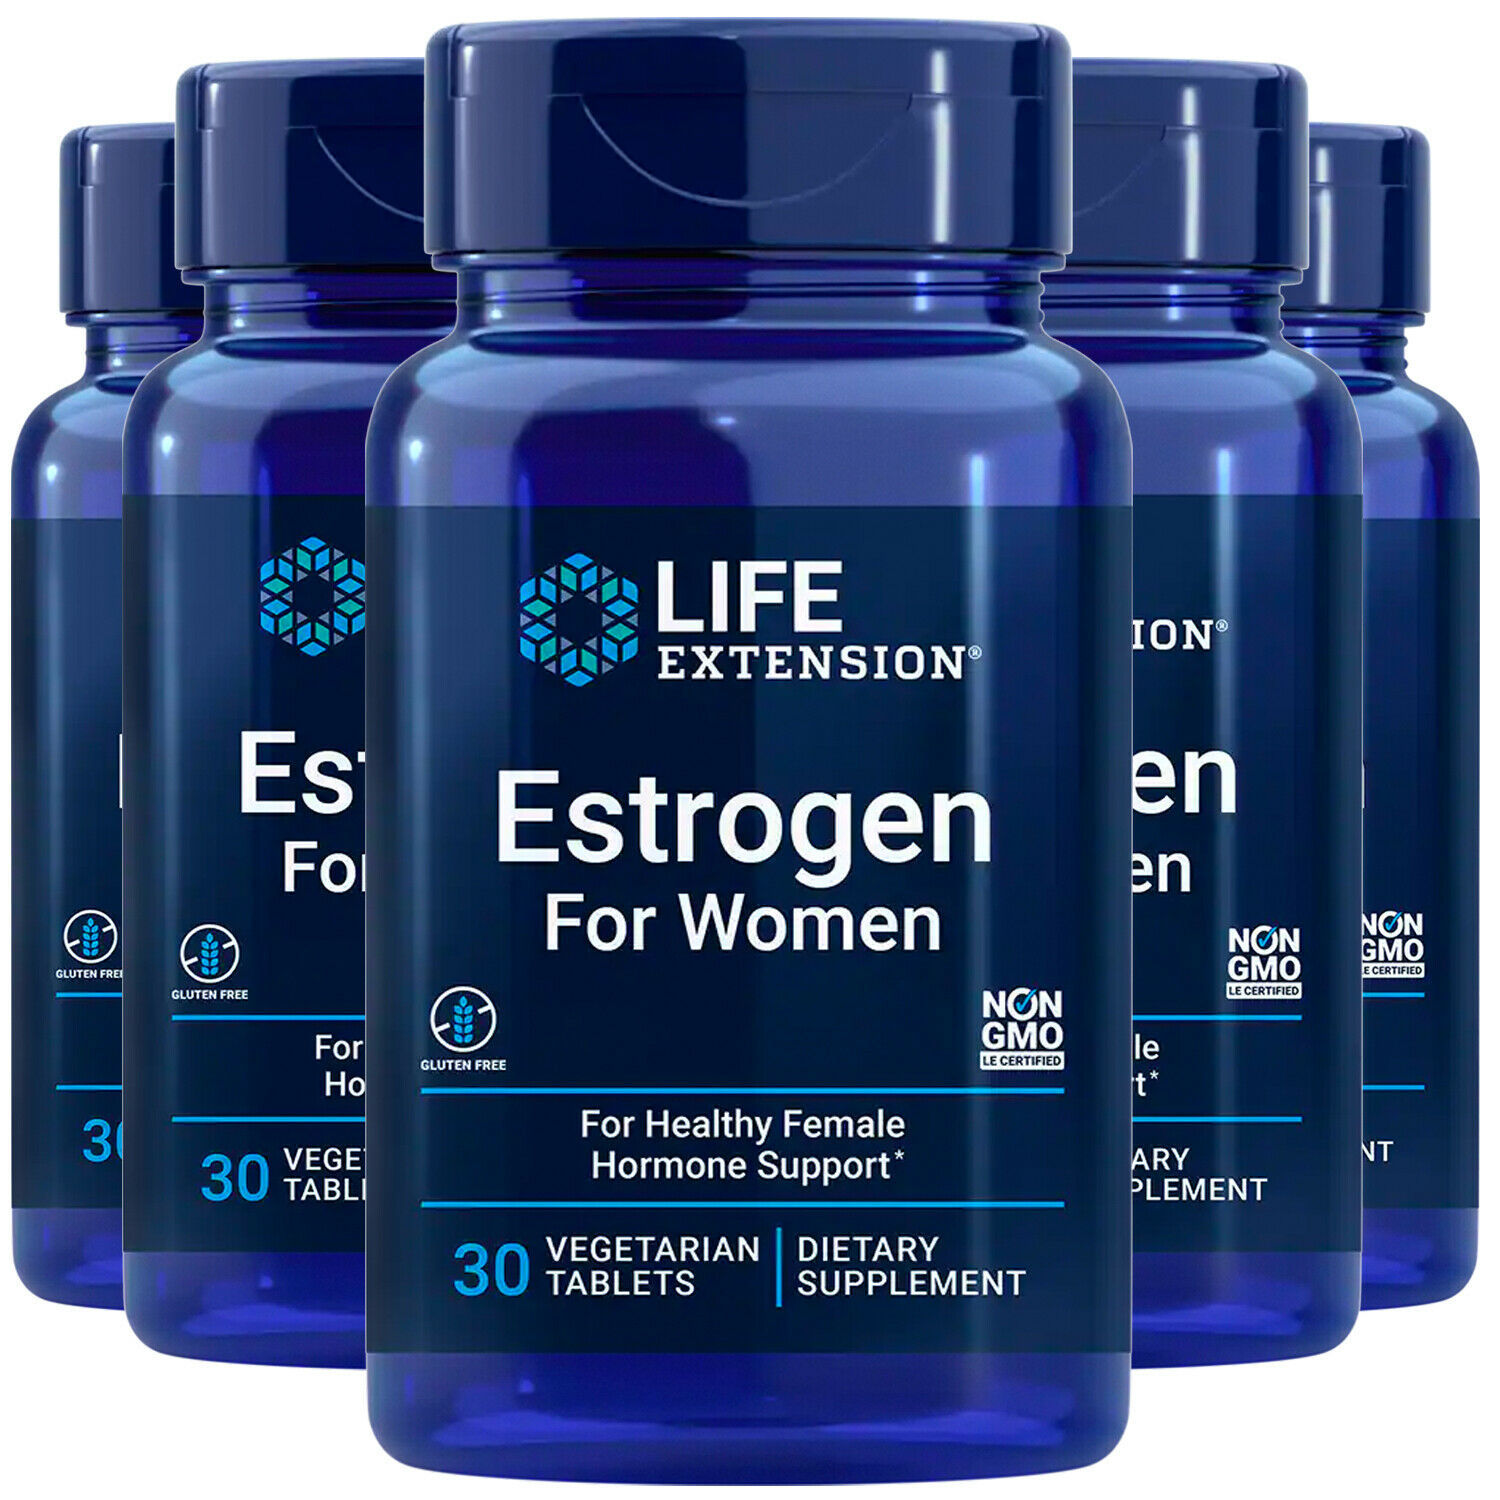 Life Extension Estrogen For Women 5X30tabs Brocc/Estro8PN/Licorice/Vitex NonGMO